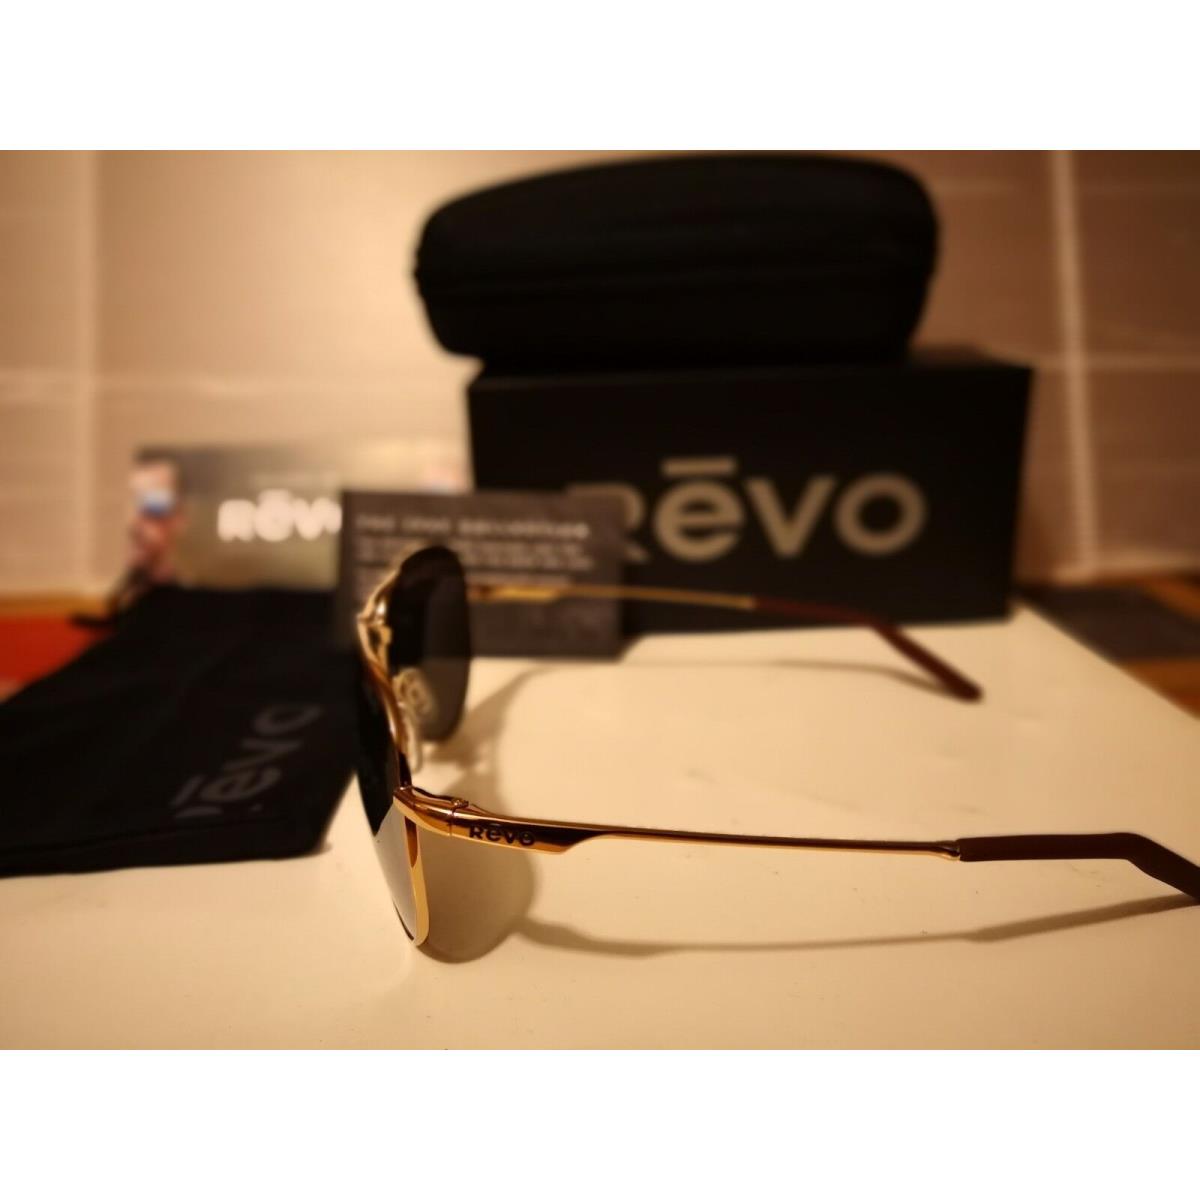 Revo sunglasses  - GOLD Frame, Crystal Graphite Polarized Lens